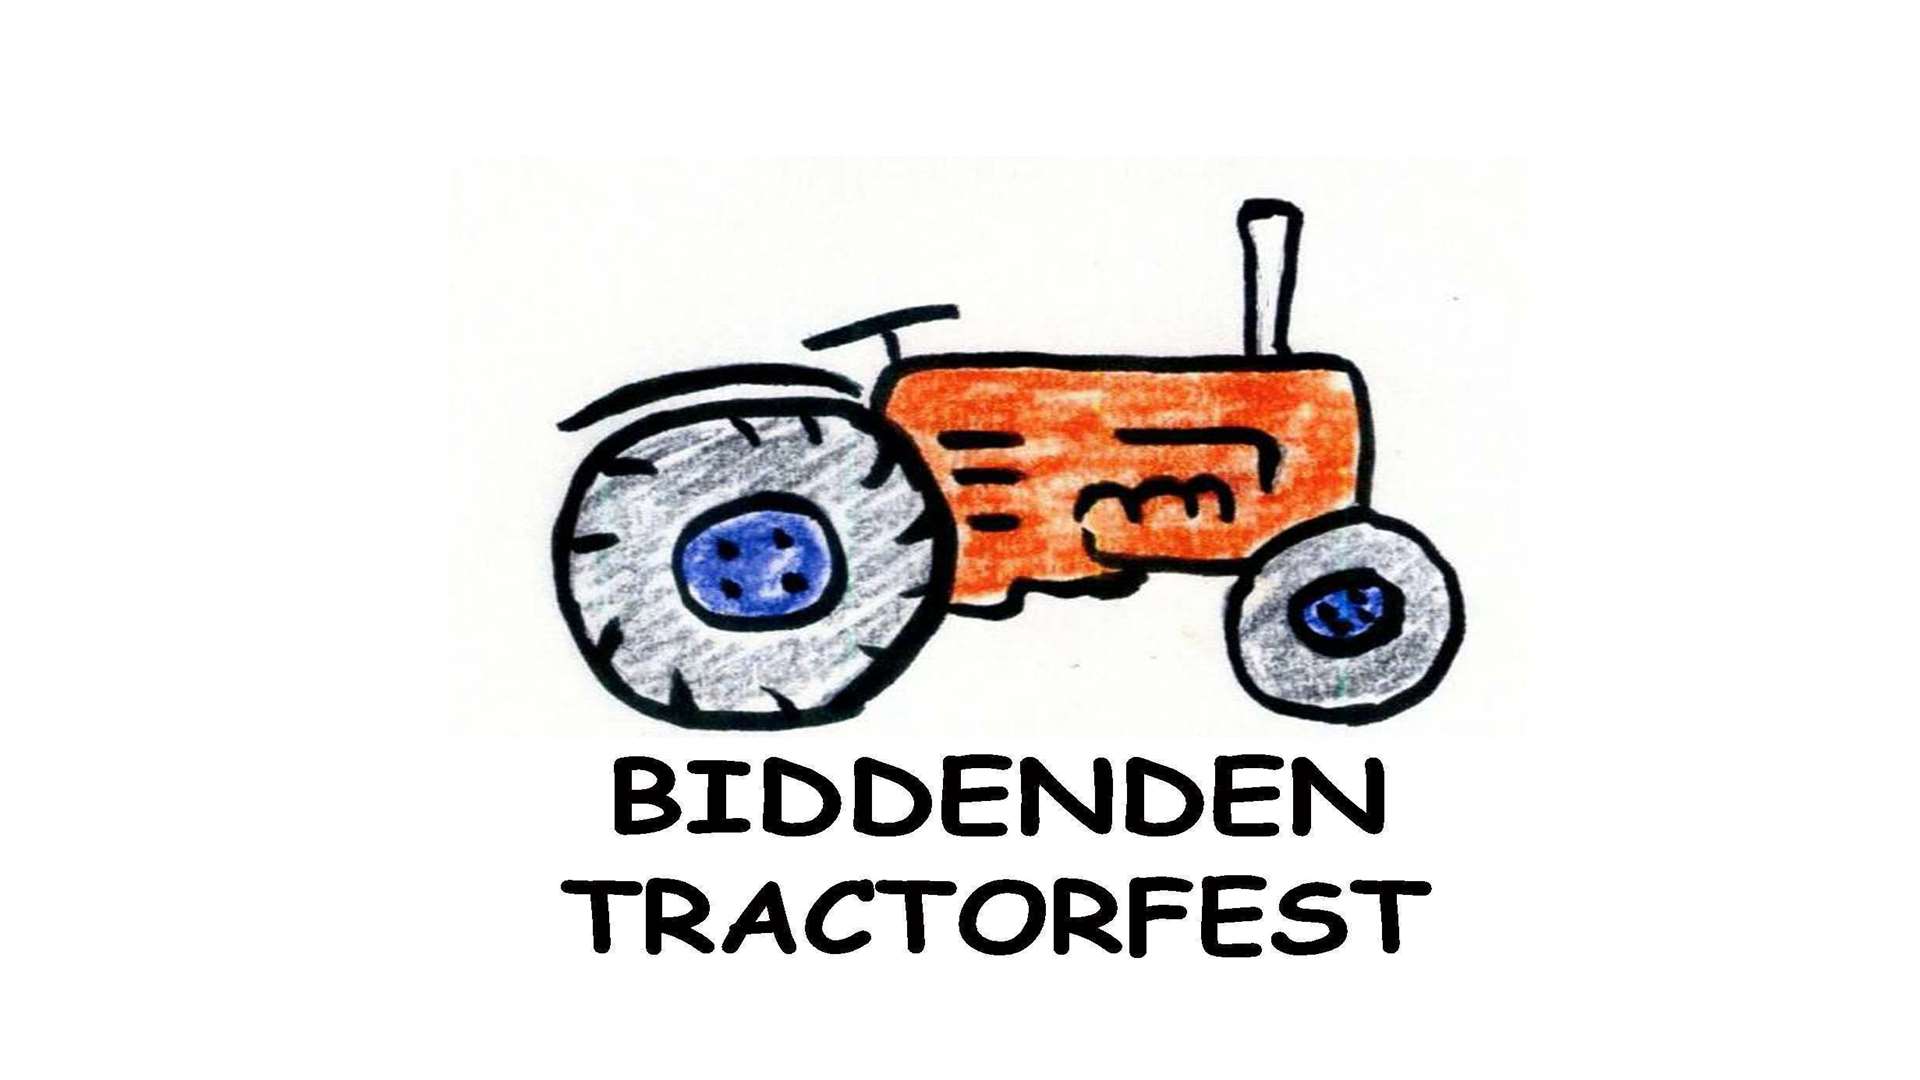 The Biddenden Tractorfest logo